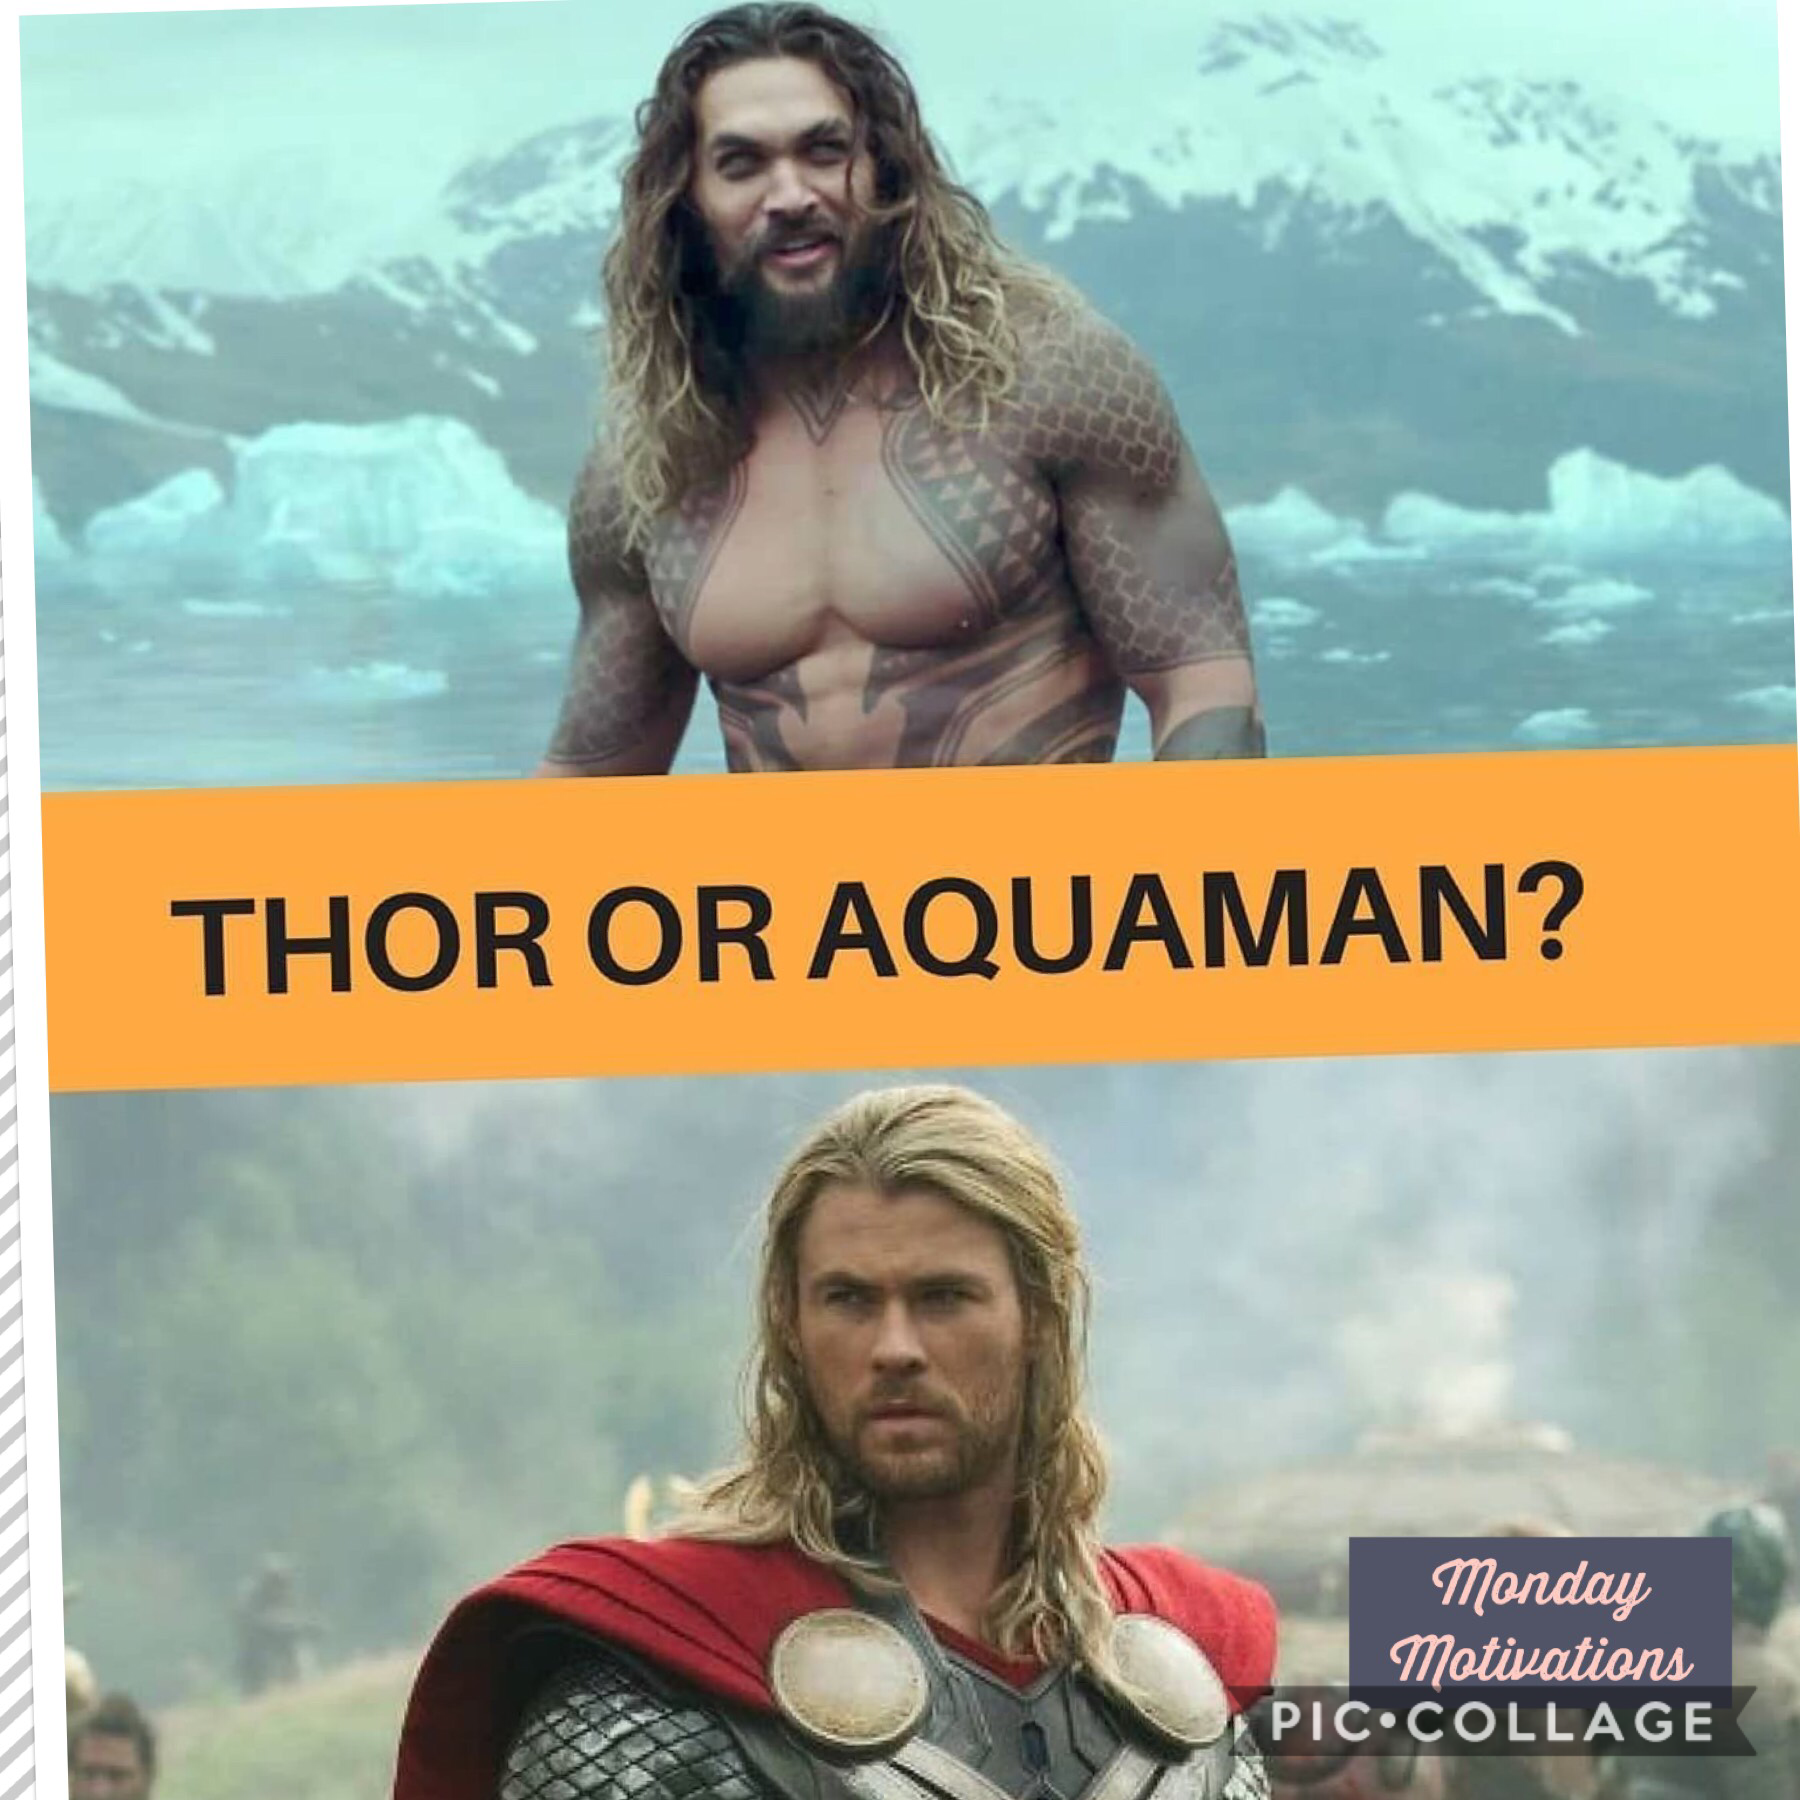 Thor or aquaman